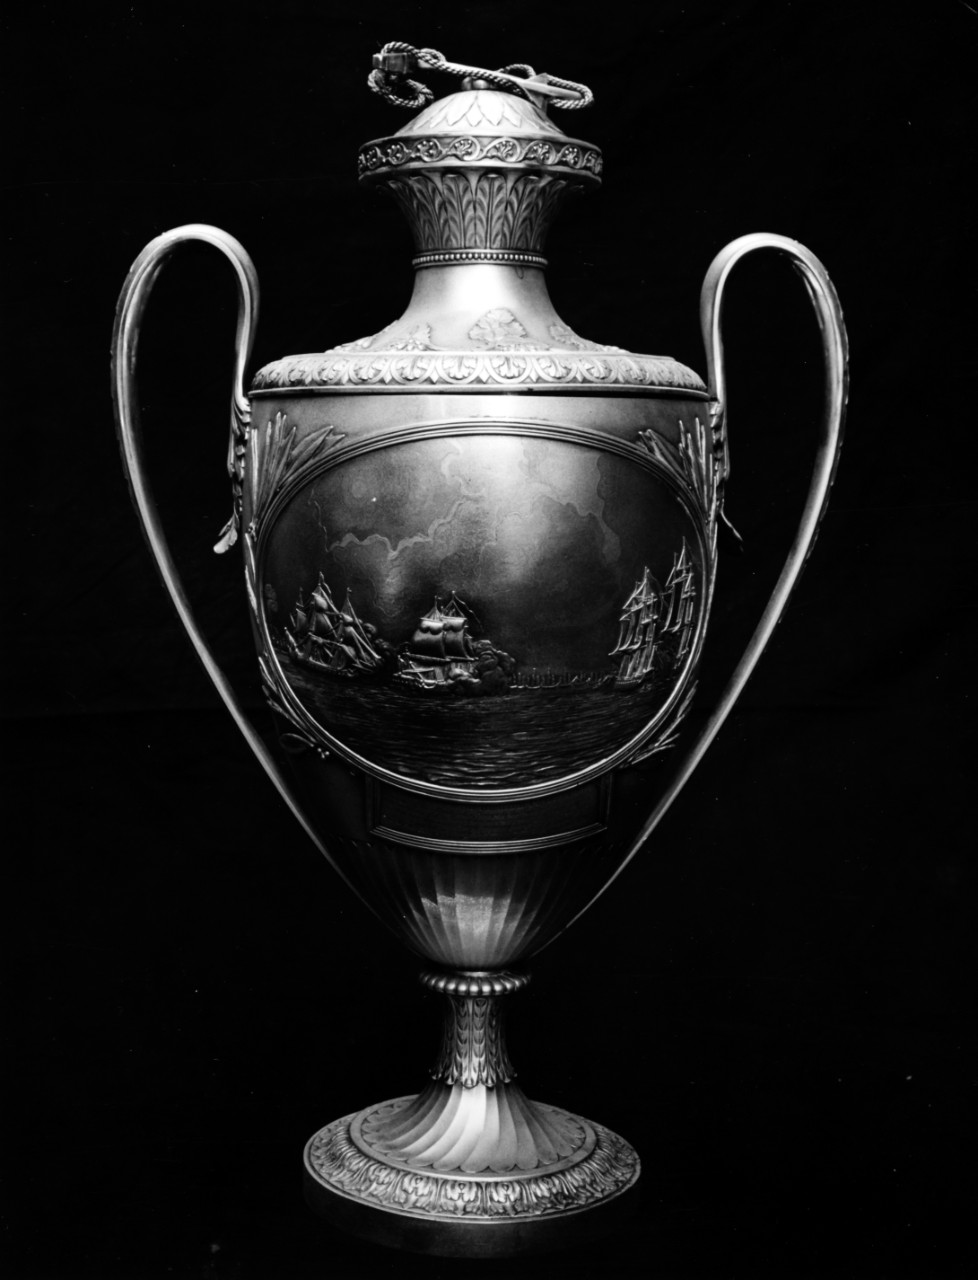 Pearson Cup presented to Captain Sir Richard Pearson, Royal Navy